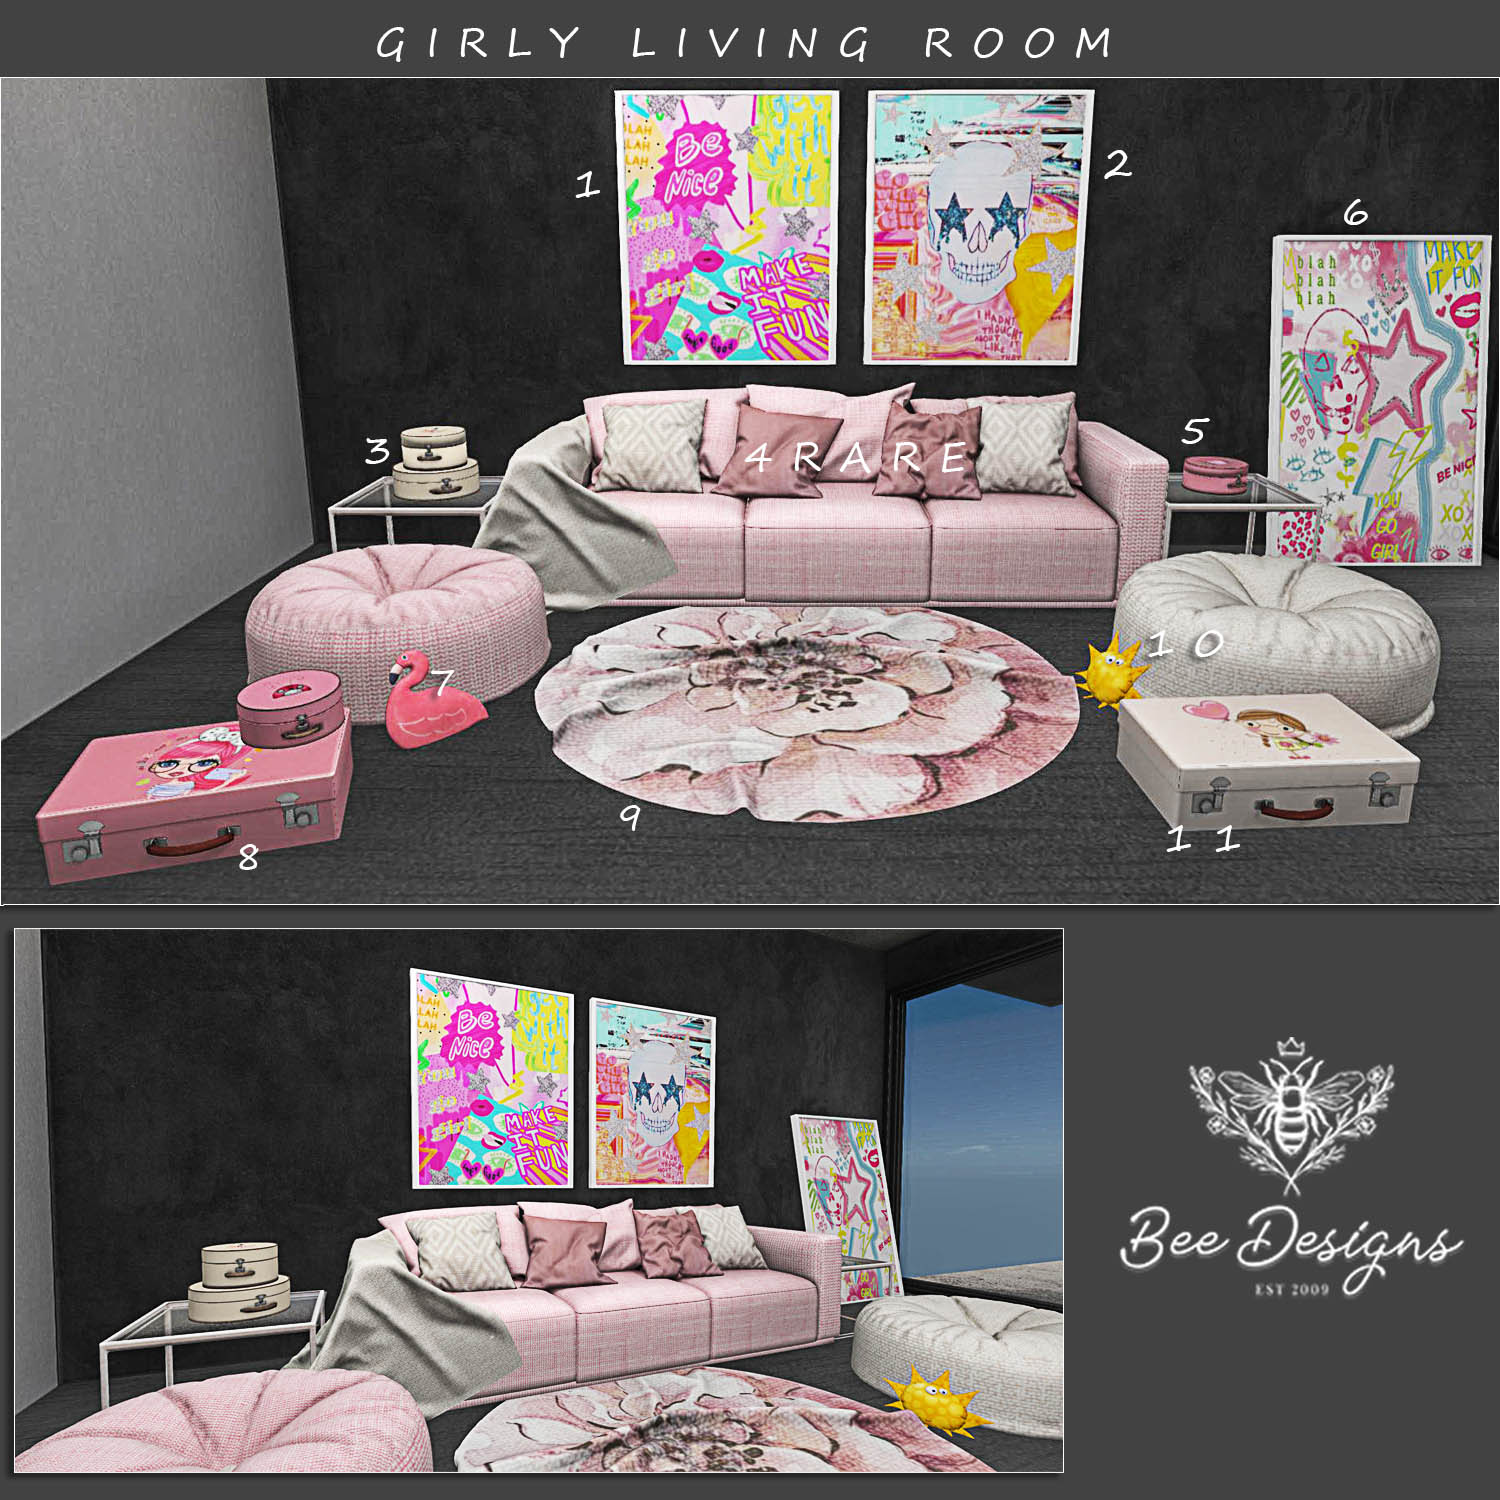 Bee Designs – Girly Living Room